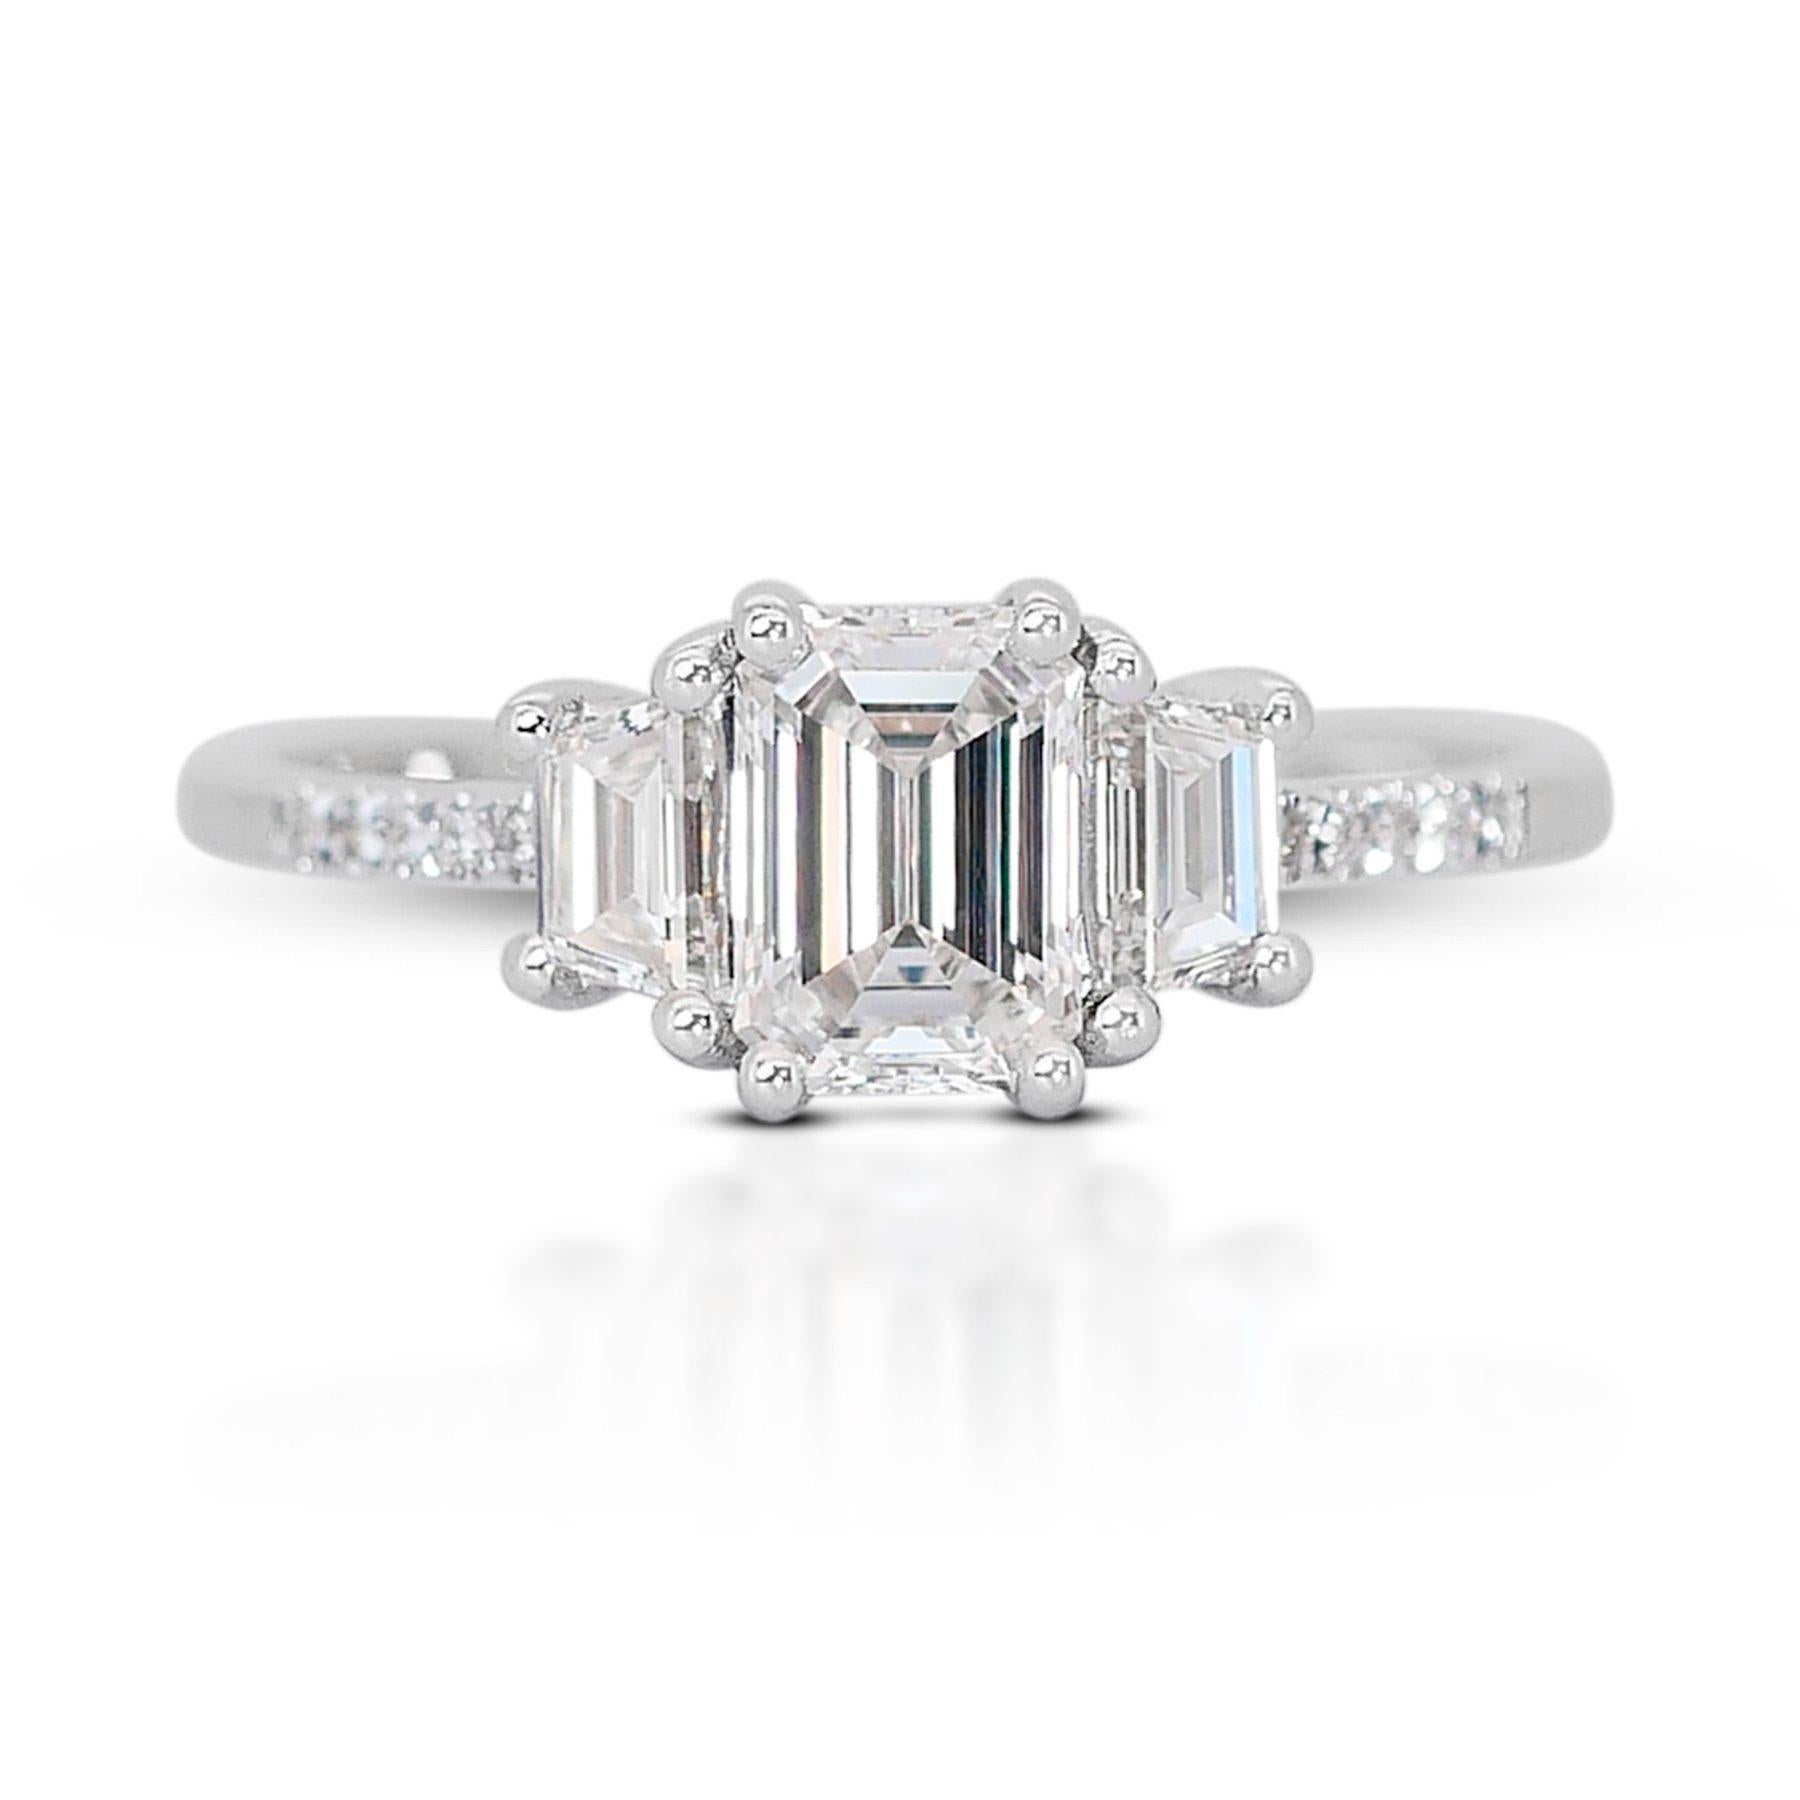 Elegant 1.11ct Diamond 3-Stone Ring in 18k White Gold - IGI Certified For Sale 2